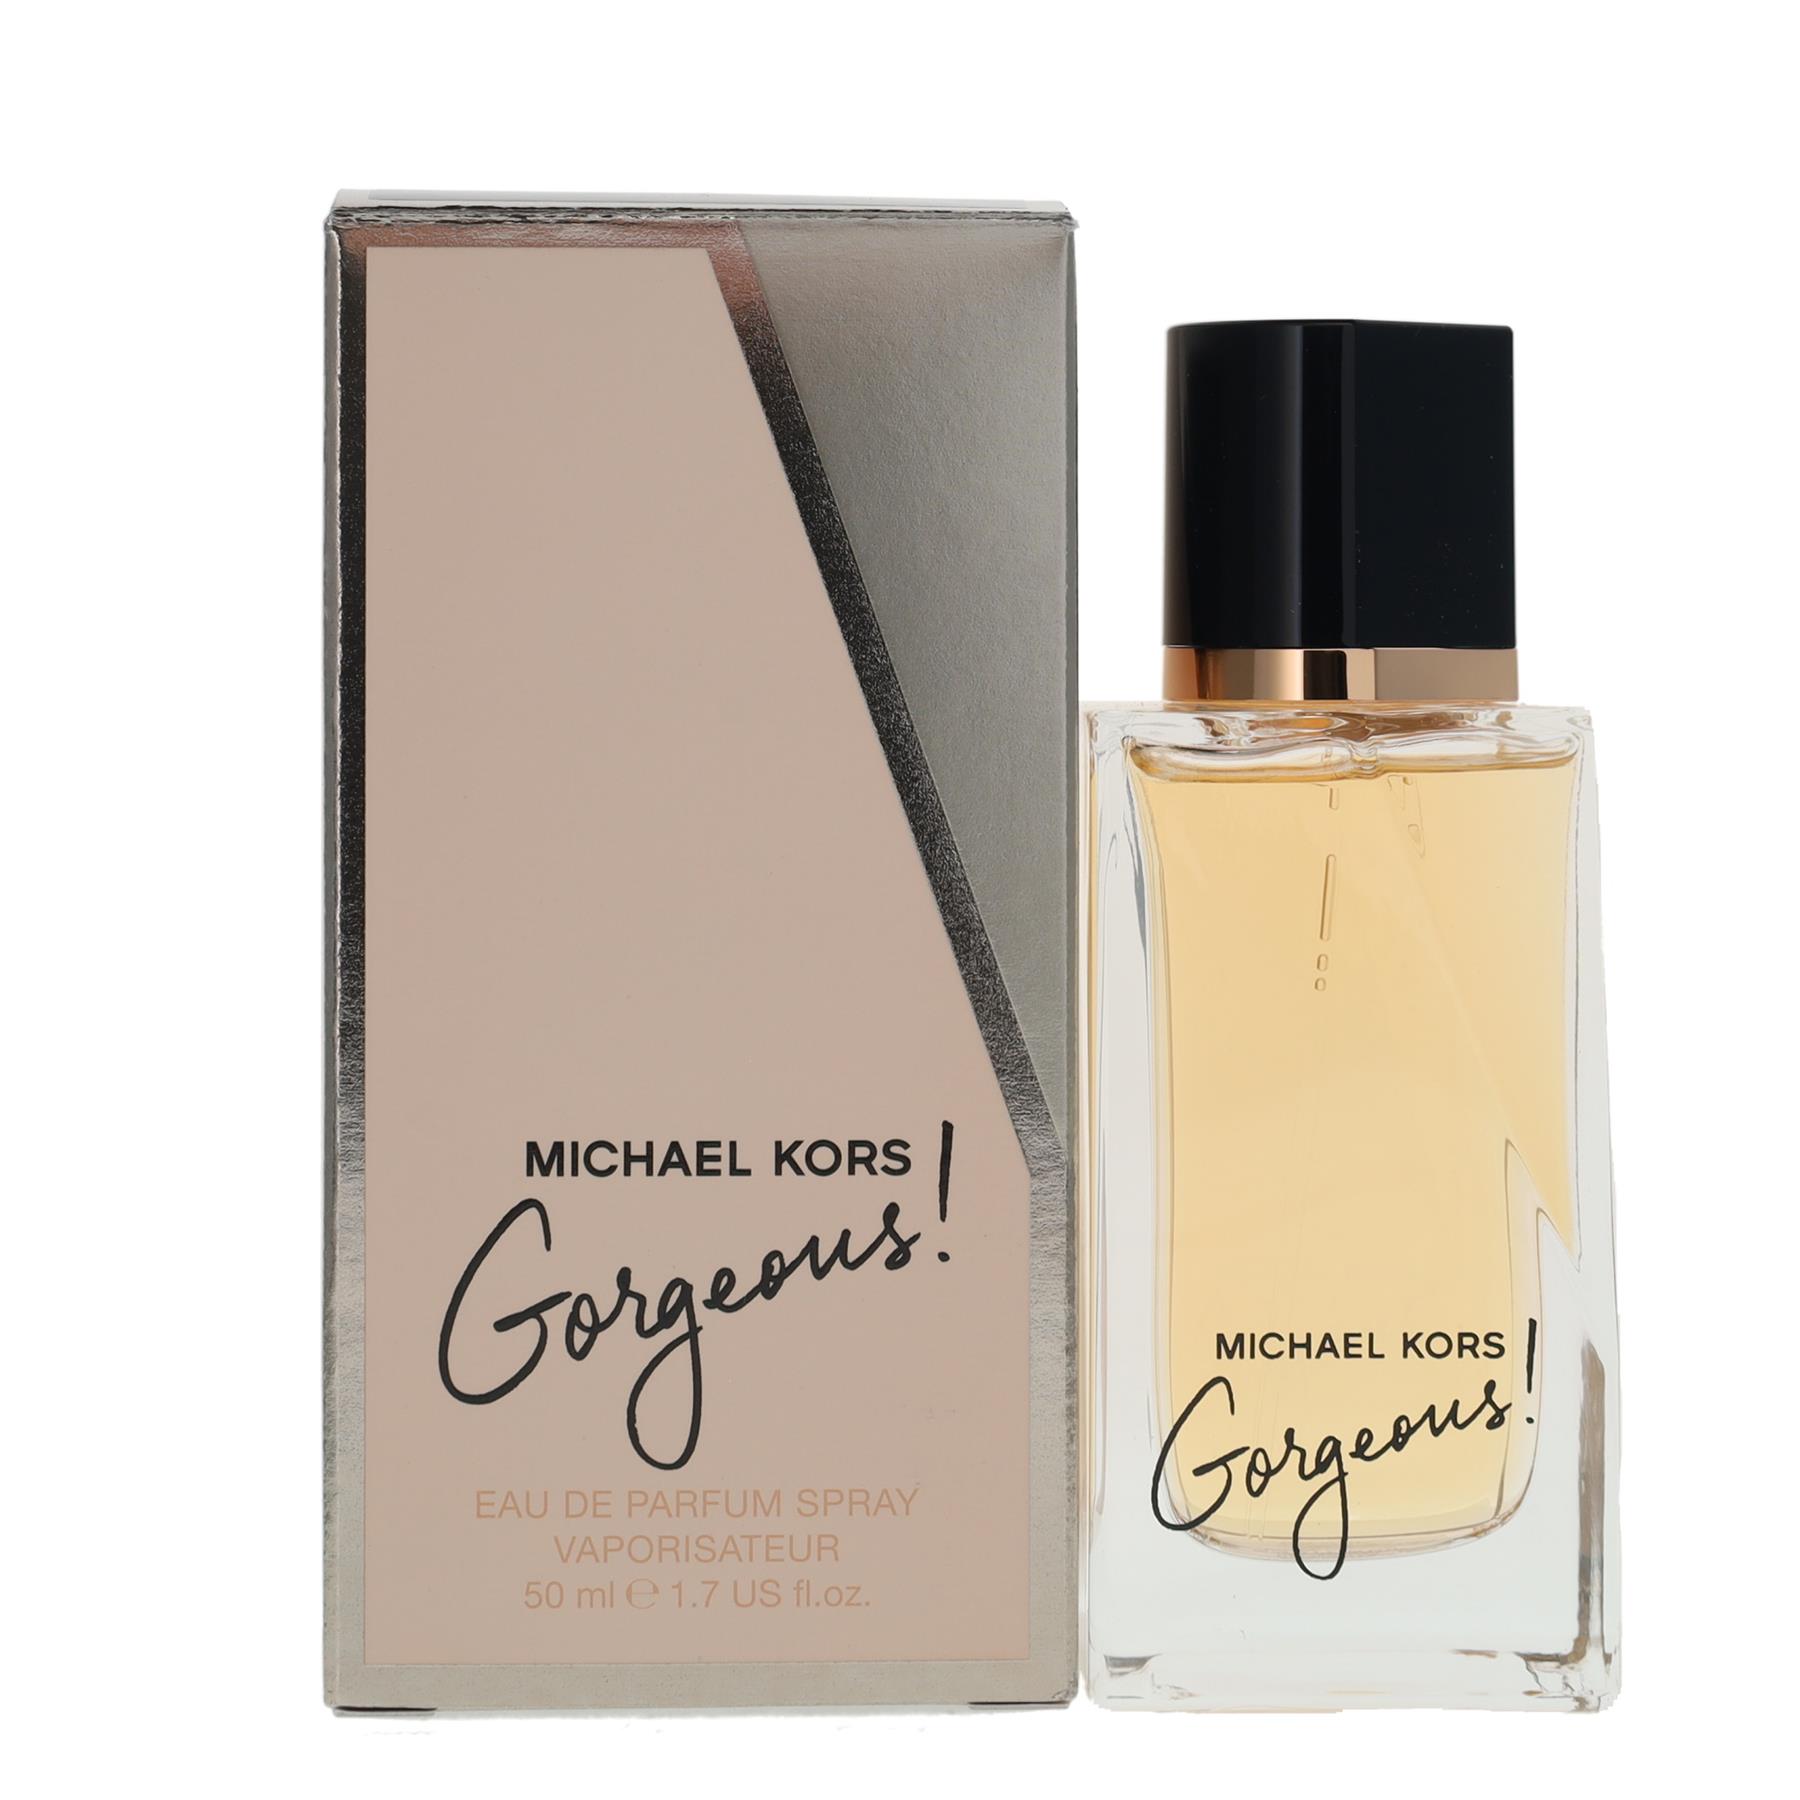 Michael Kors Gorgeous 50ml Eau de Parfum Spray for Her from Perfume Plus Direct